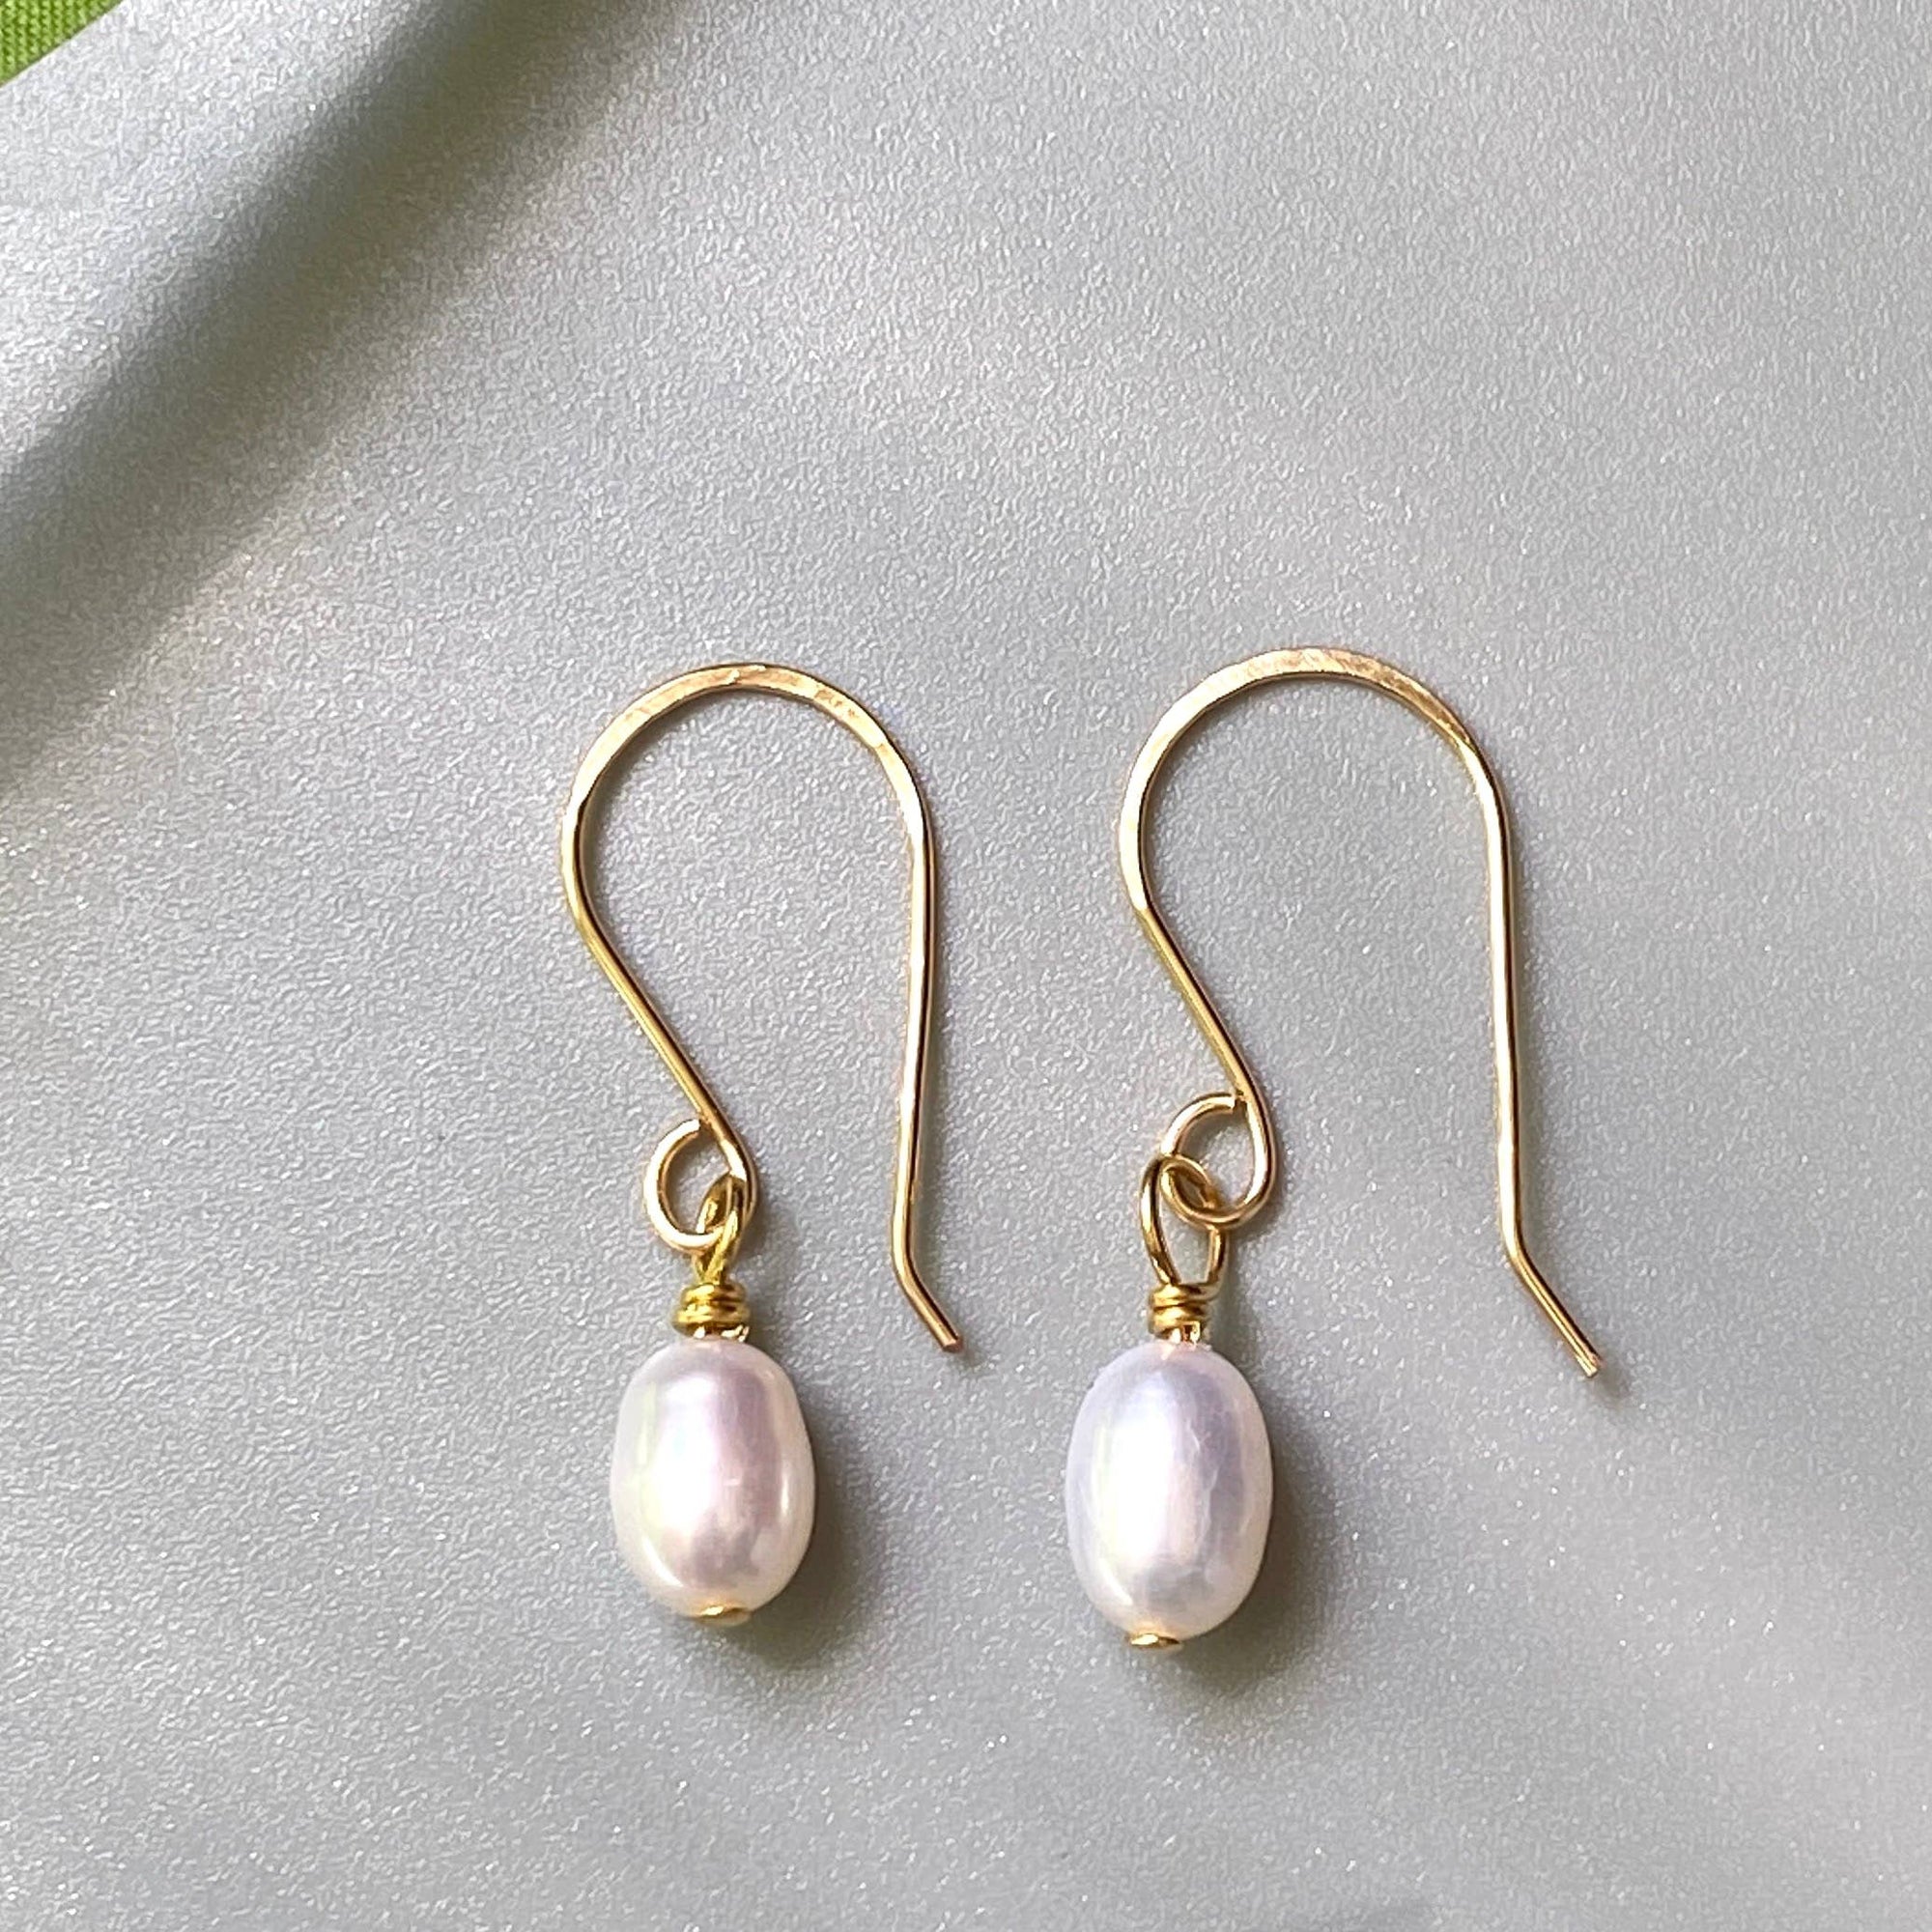 Freshwater Pearl  Earrings: Gold or silver